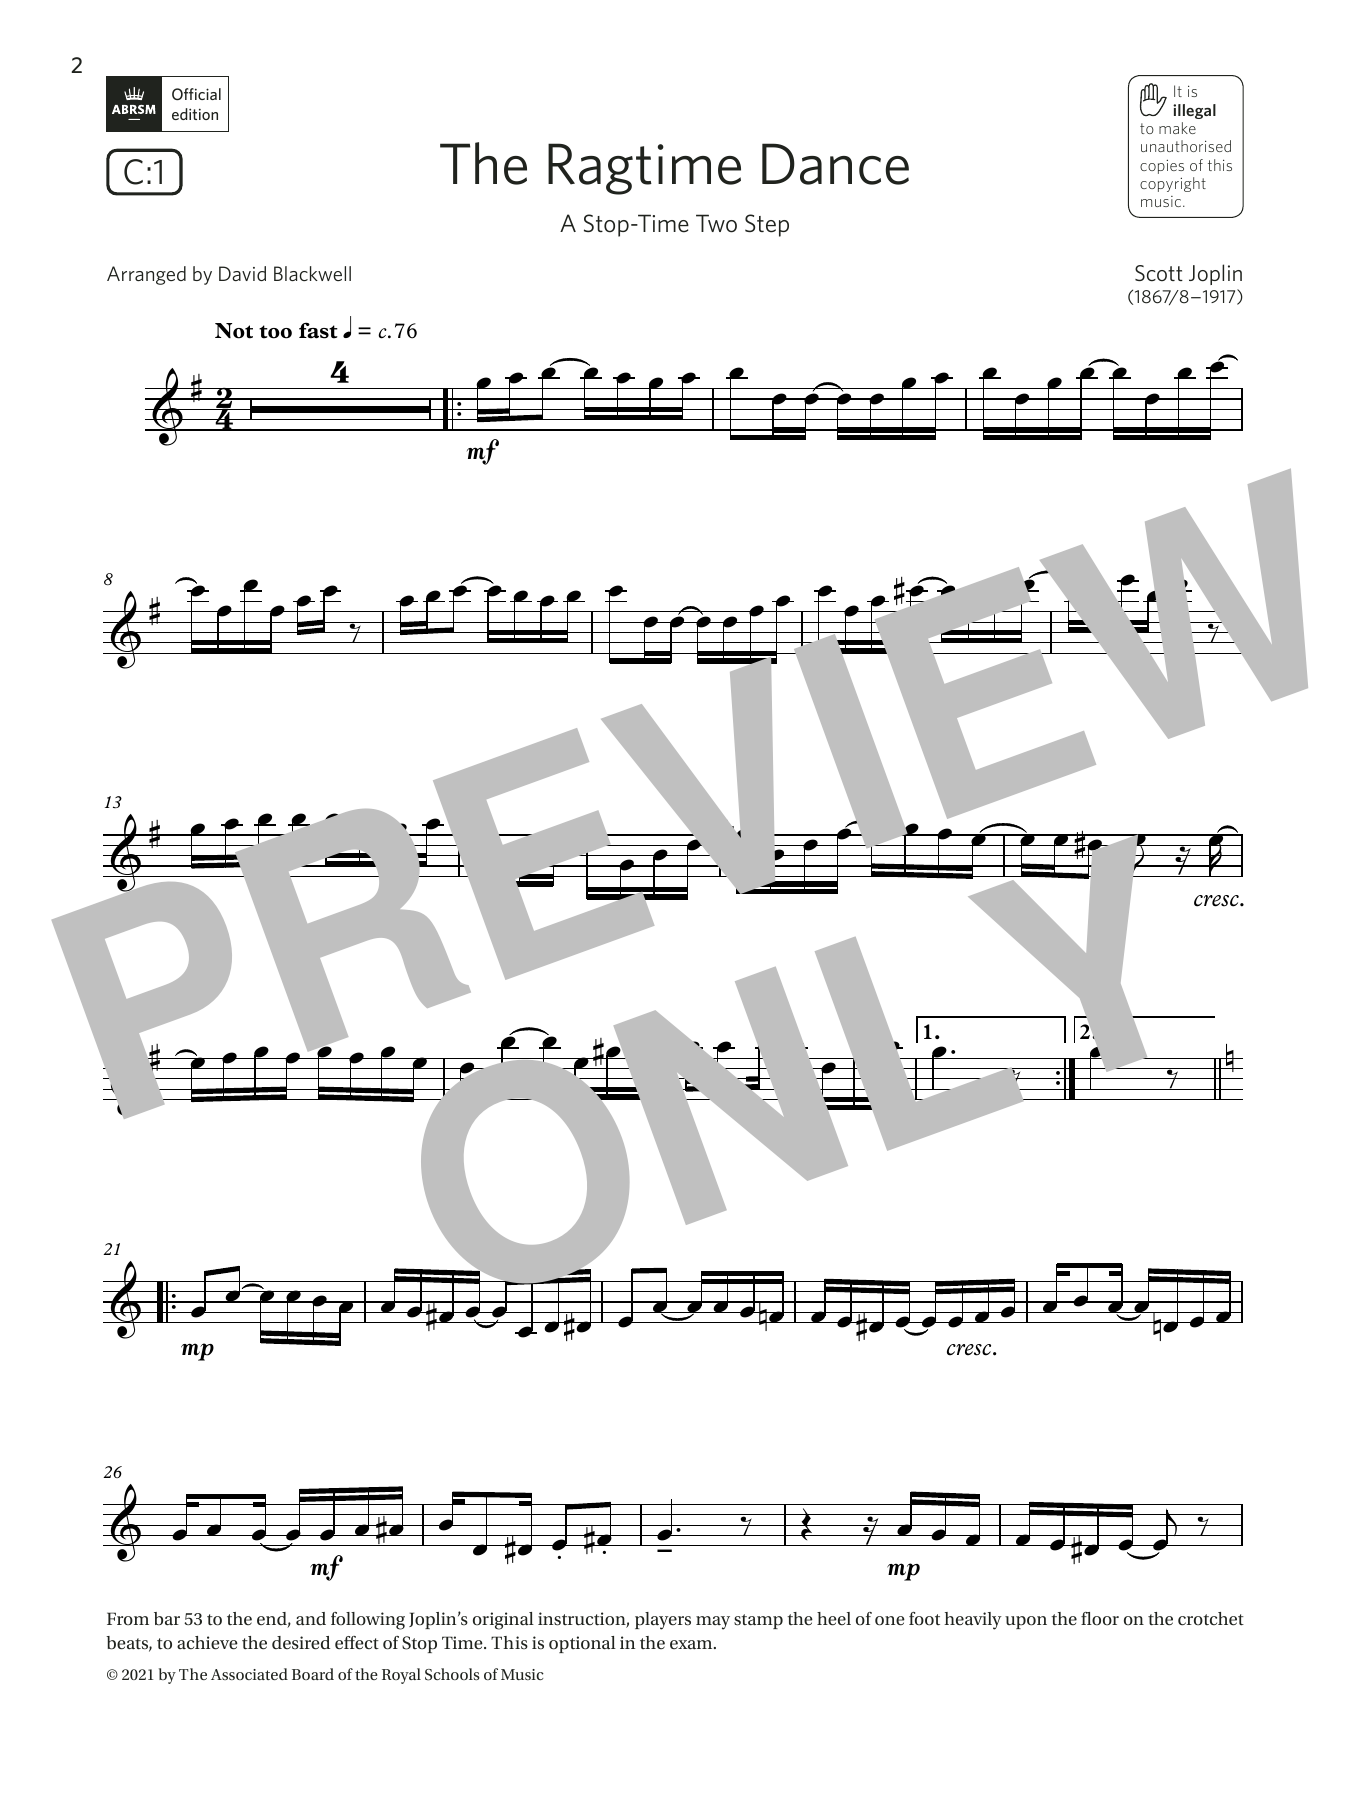 Download Scott Joplin The Ragtime Dance (A Stop-Time Two Step Sheet Music